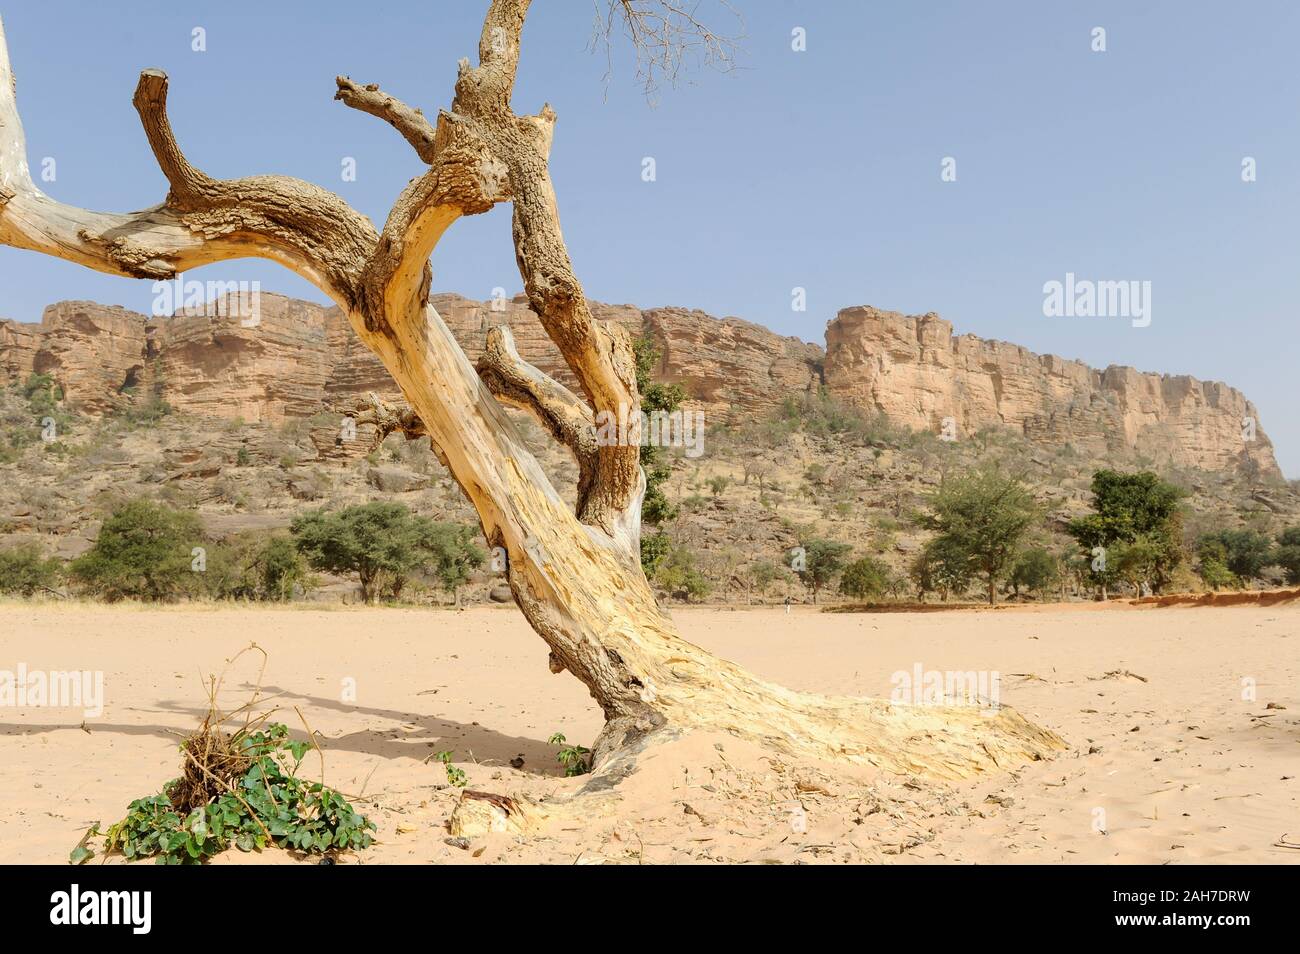 MALI,  Bandiagara, Dogonland, habitat of the ethnic group Dogon, Falaise rock formation, sand dune and dead tree Stock Photo